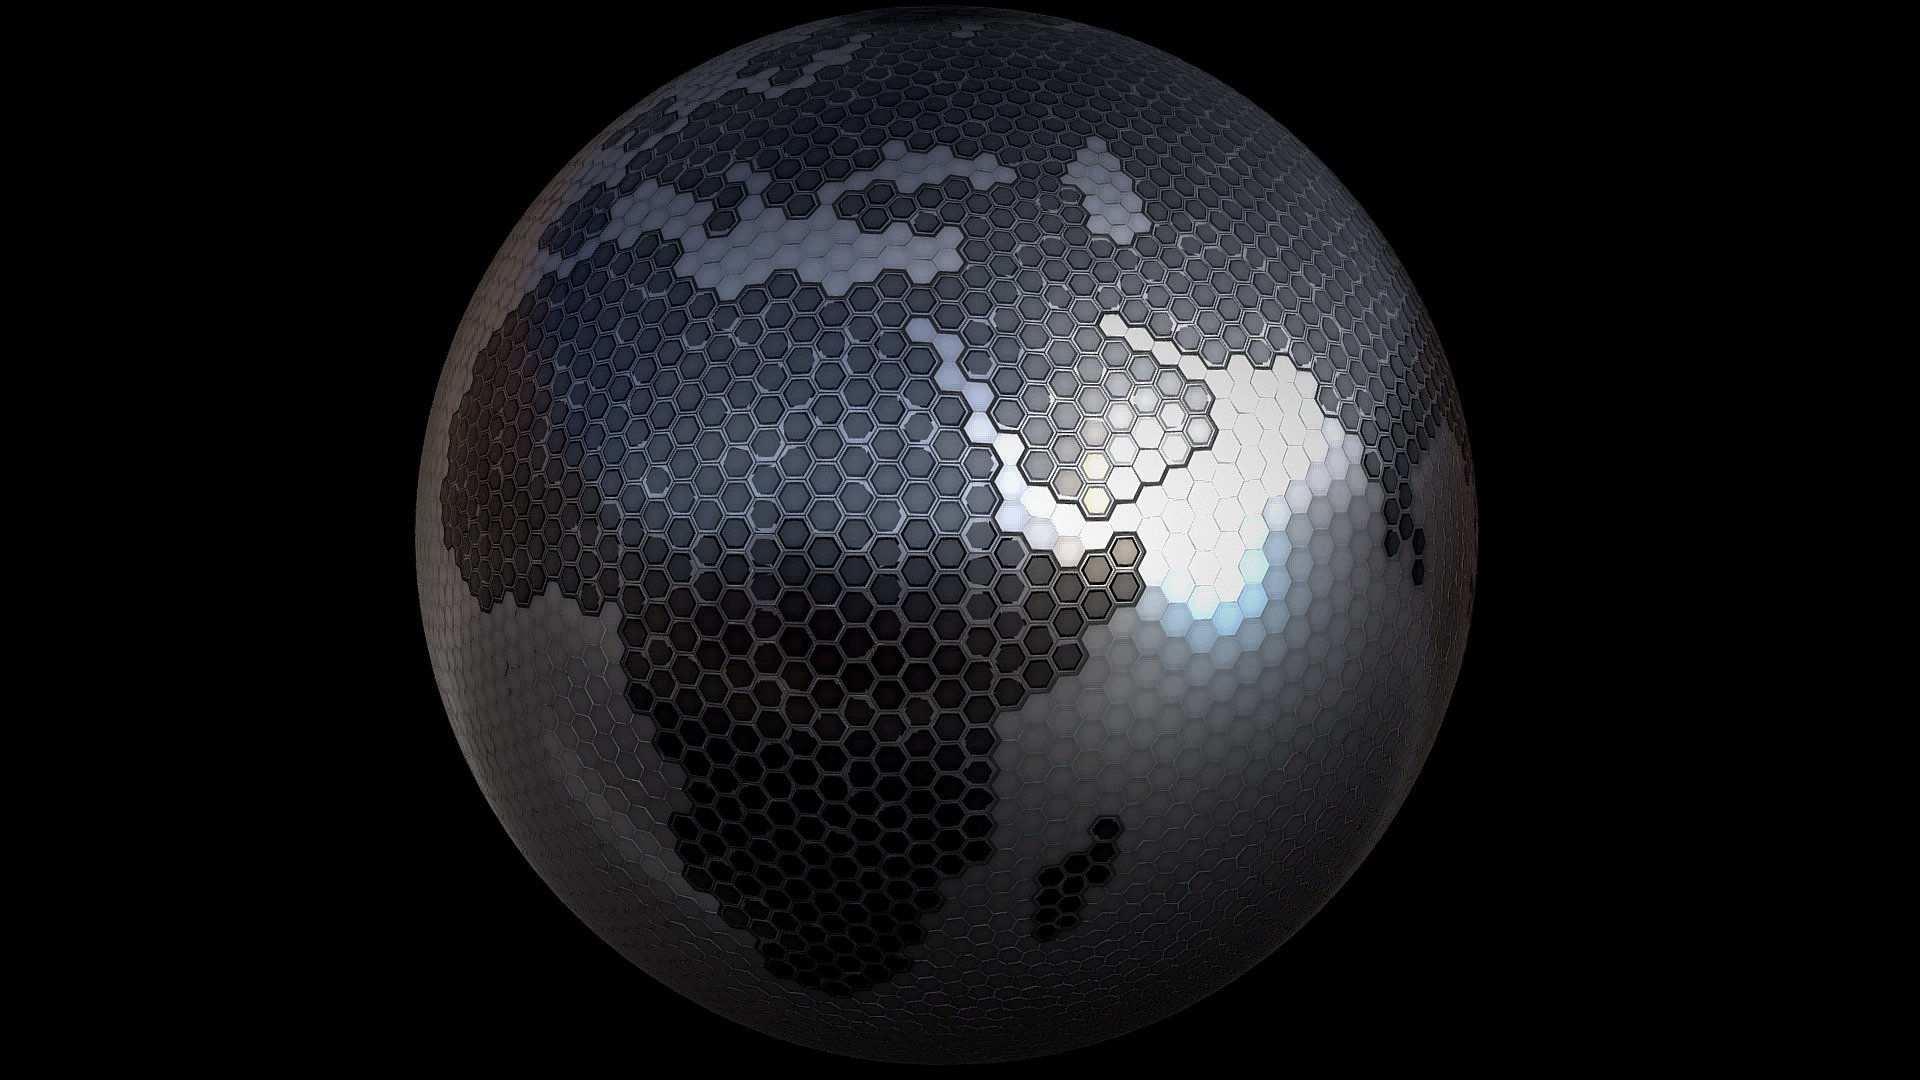 HEXAGON PLANET 2.0

Planet Earth made of hexagonal forms.

Formats Included: c4d, fbx, 3ds, obj, mtl

Bonus Files:  bip, ksp  (KeyShot Scene)** - HEXAGON PLANET 2.0 - Buy Royalty Free 3D model by BlockedGravity 3d model